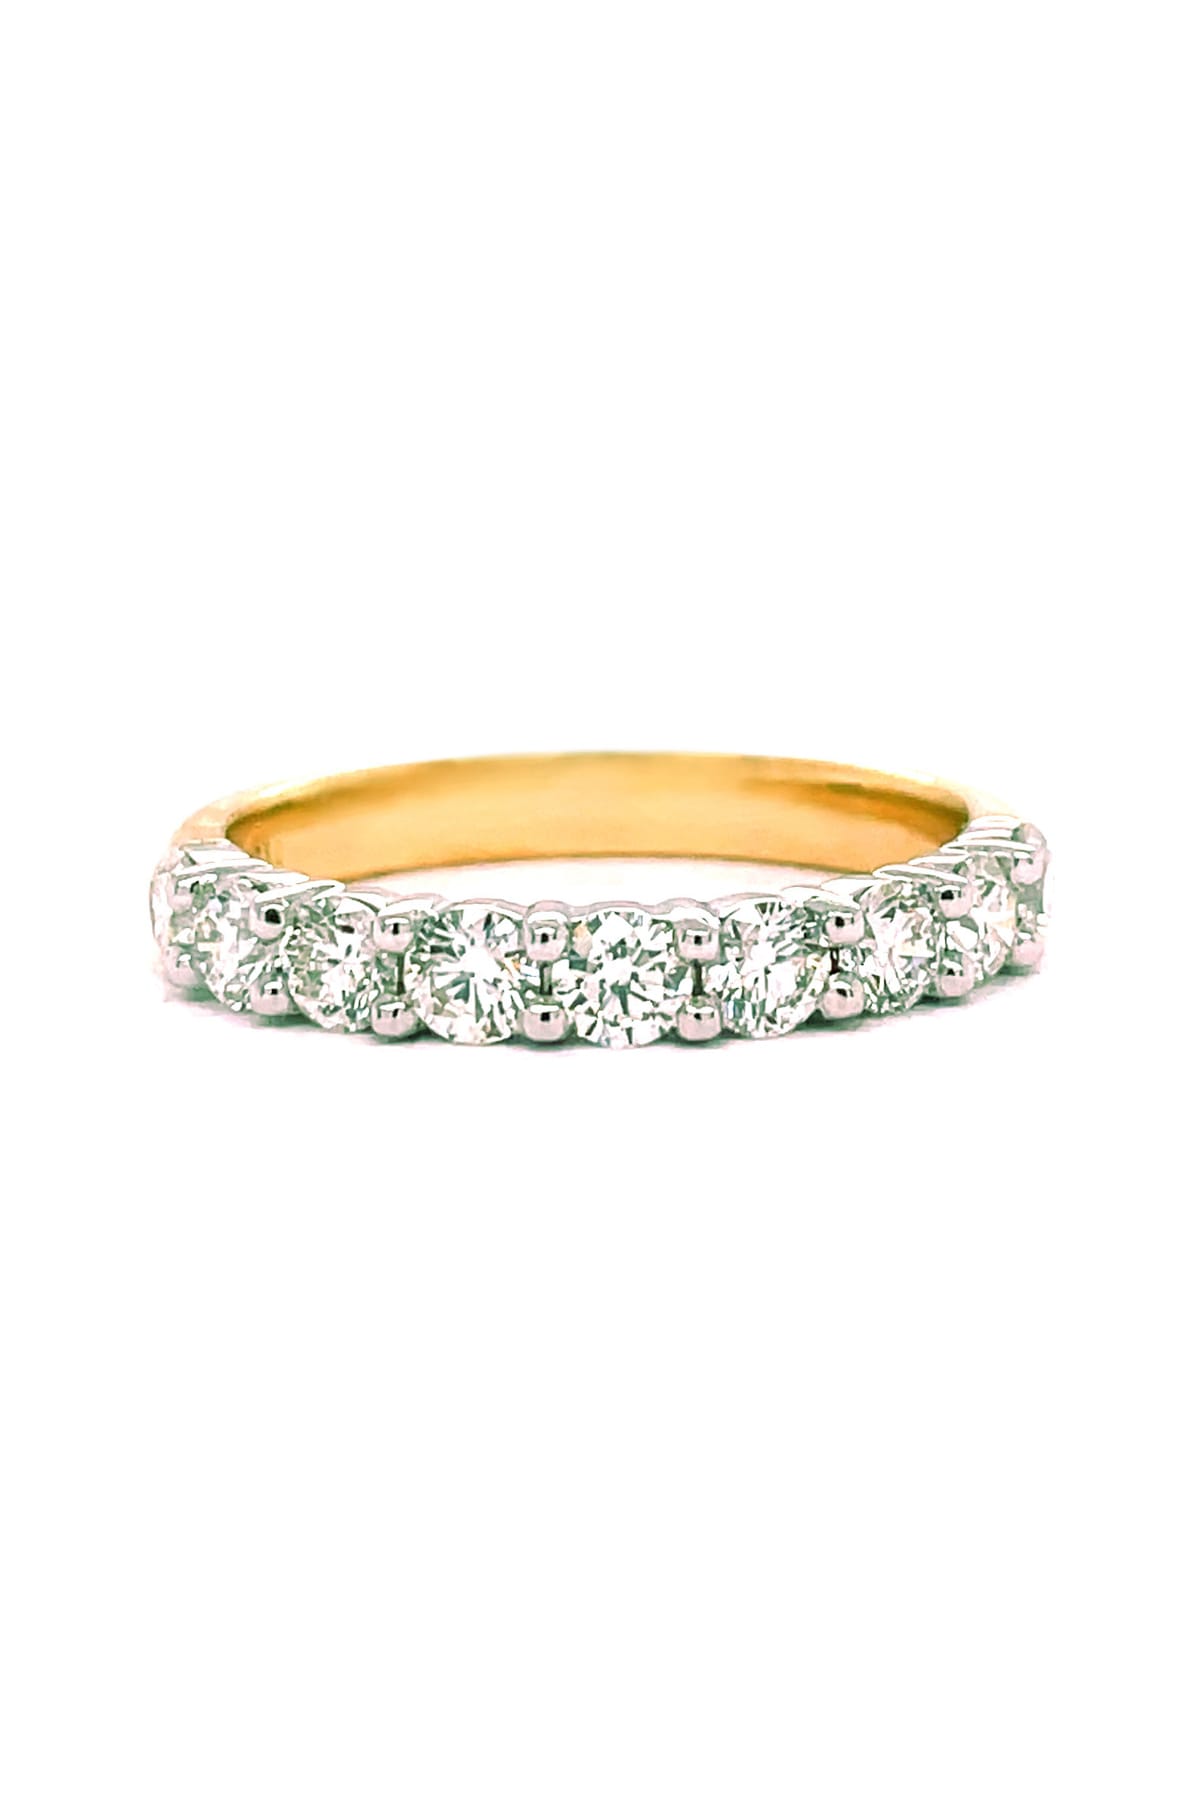 18 Carat Yellow Gold Diamond Ring available at LeGassick Diamonds and Jewellery Gold Coast, Australia.